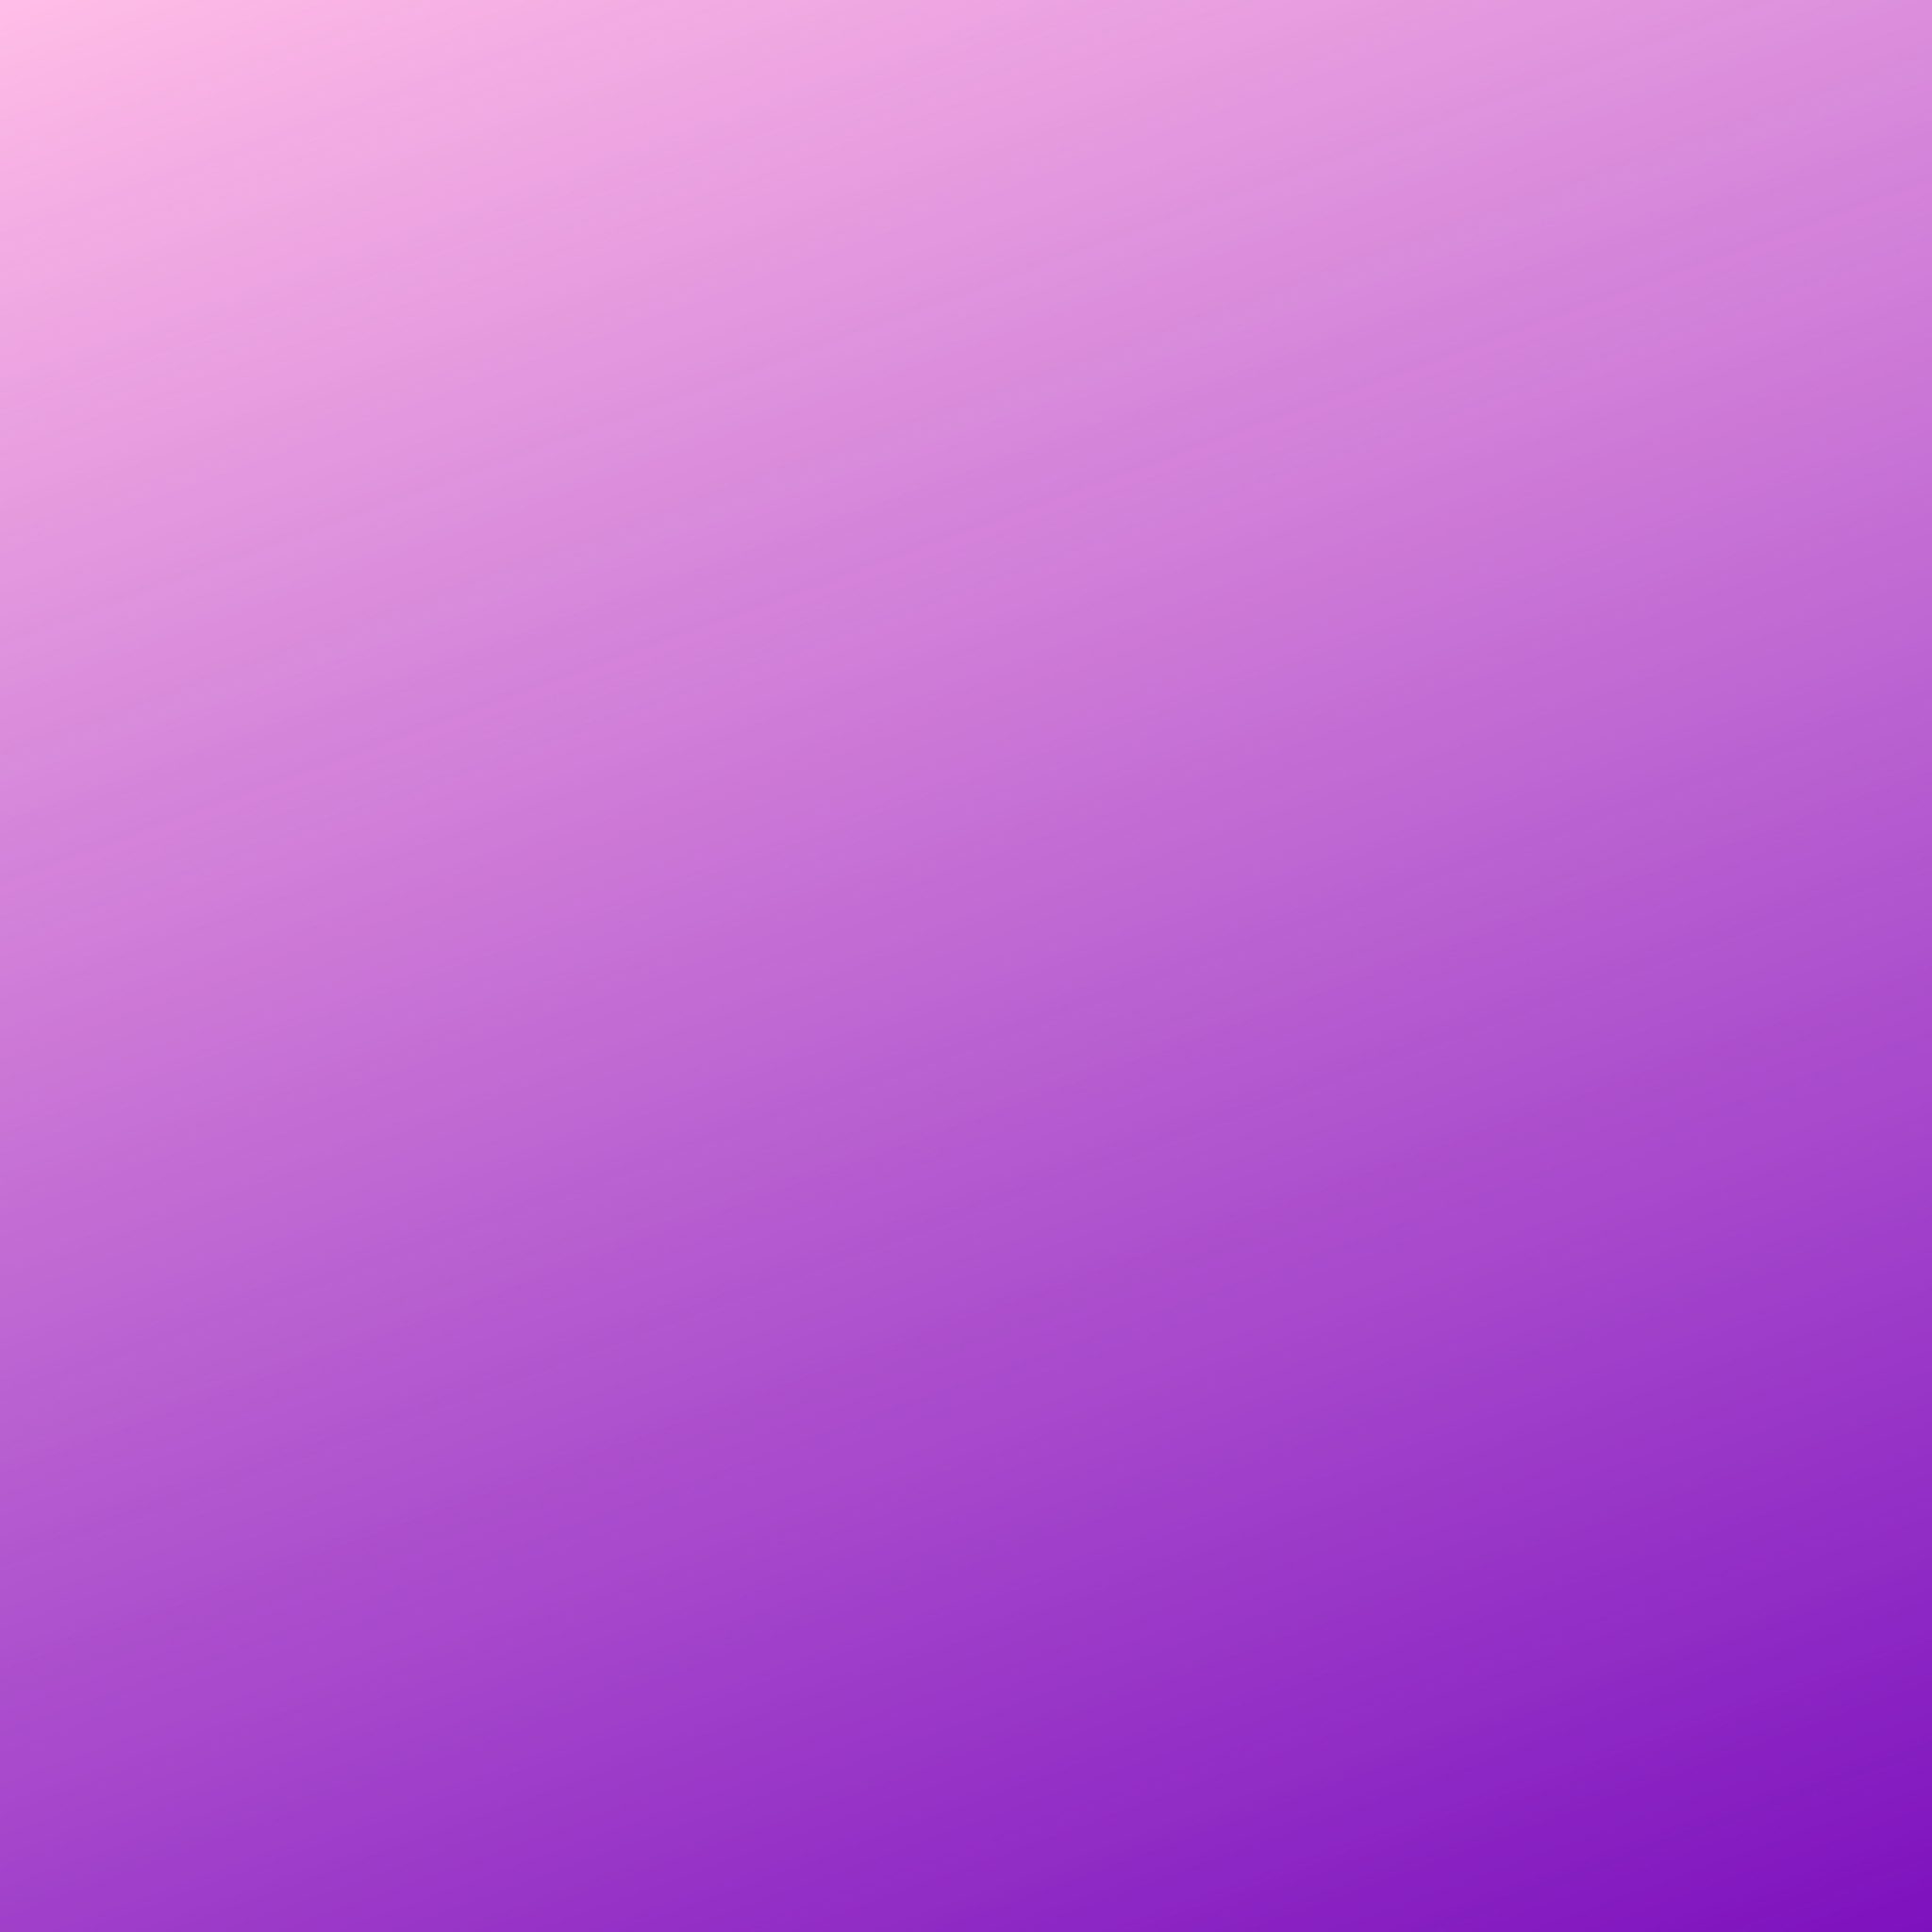 2048x2048 wallpapers iPad retina Purple Violet Background Gradient iPad Wallpaper 2048x2048 pixels resolution